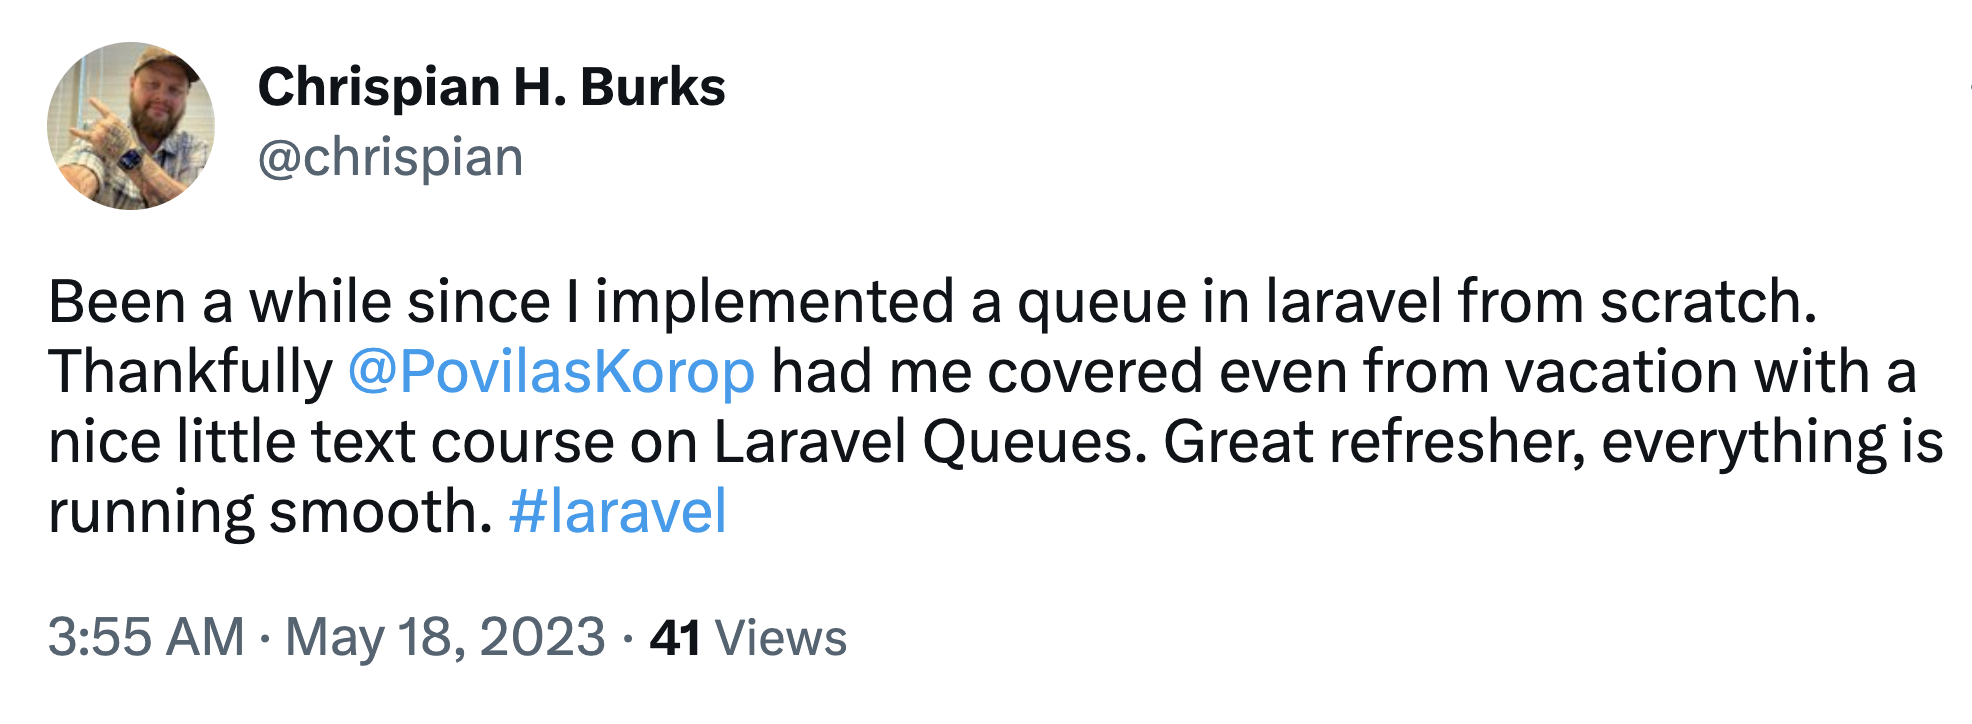 laravel-queues-testimonial.png